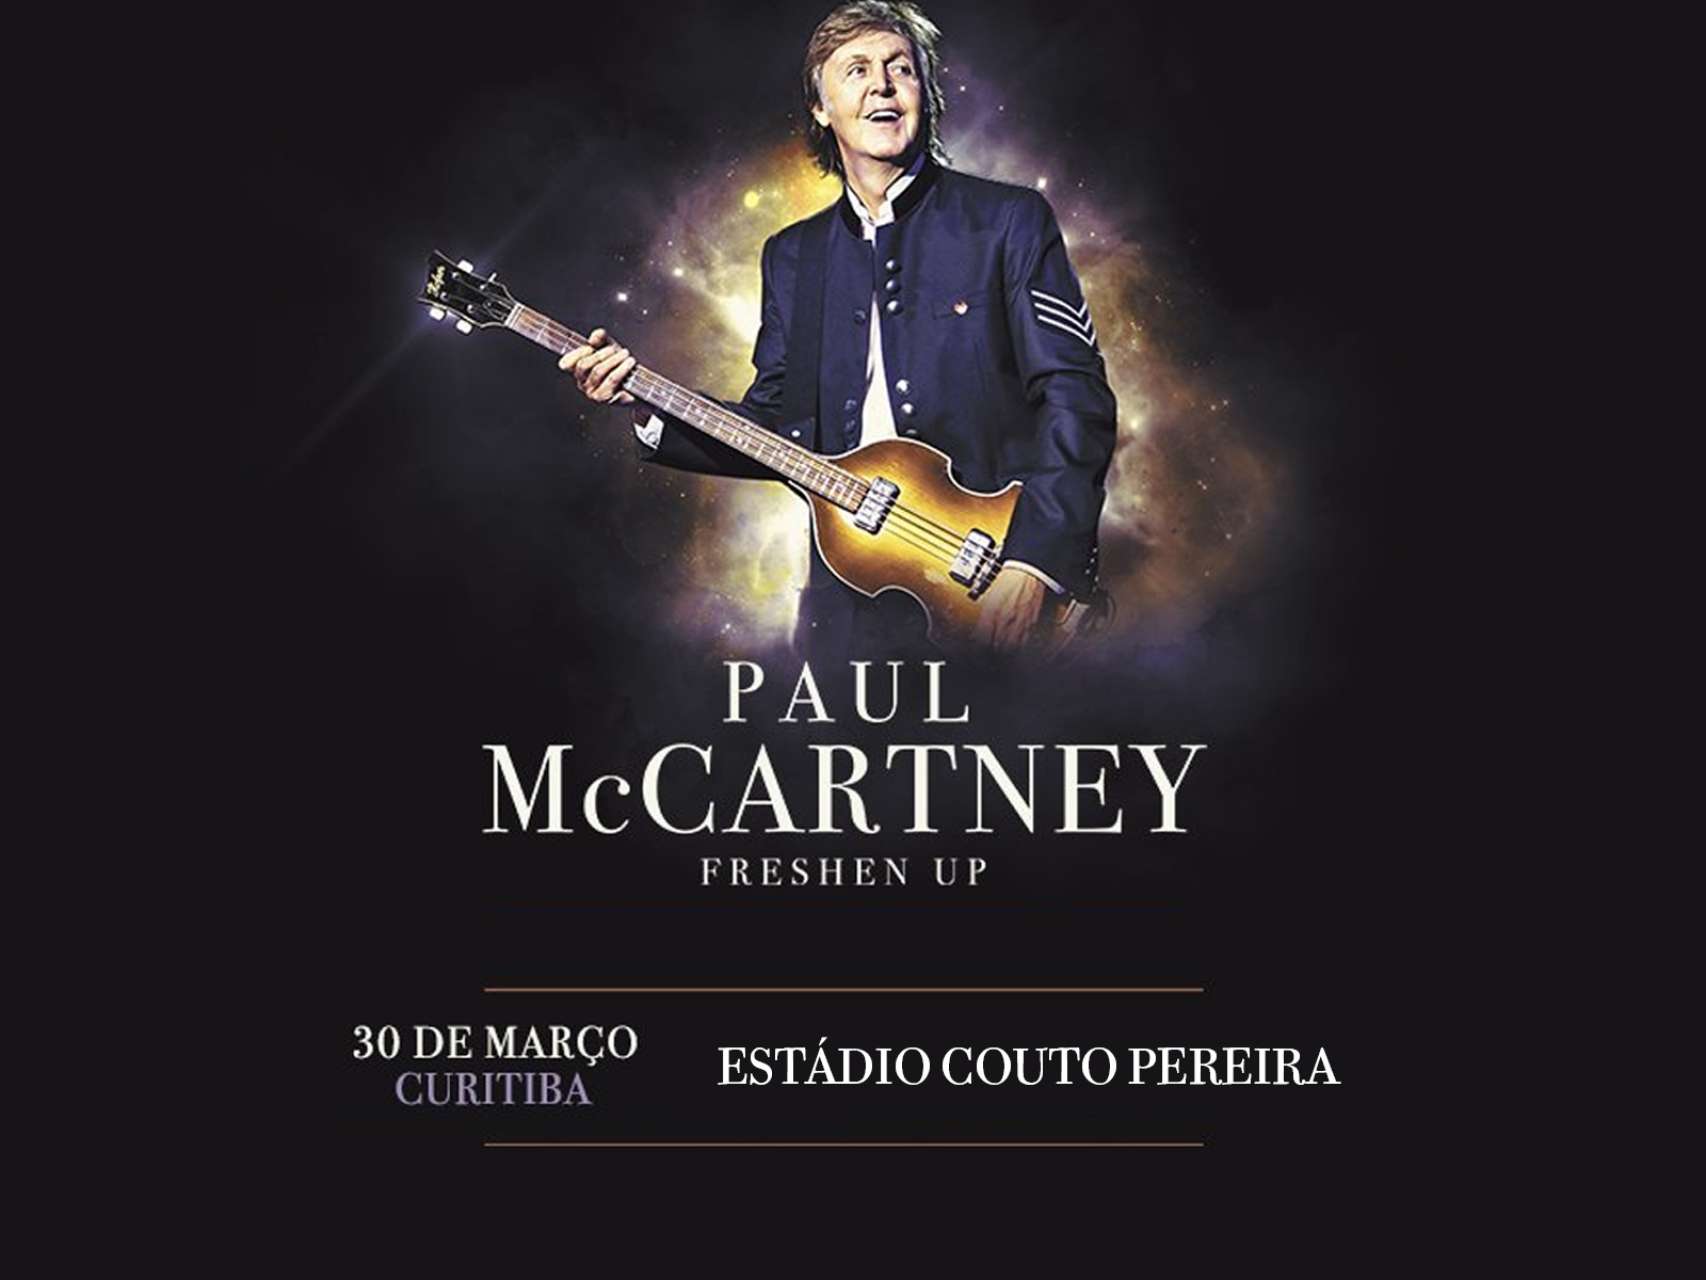 Couto Pereira receber show de Paul McCartney